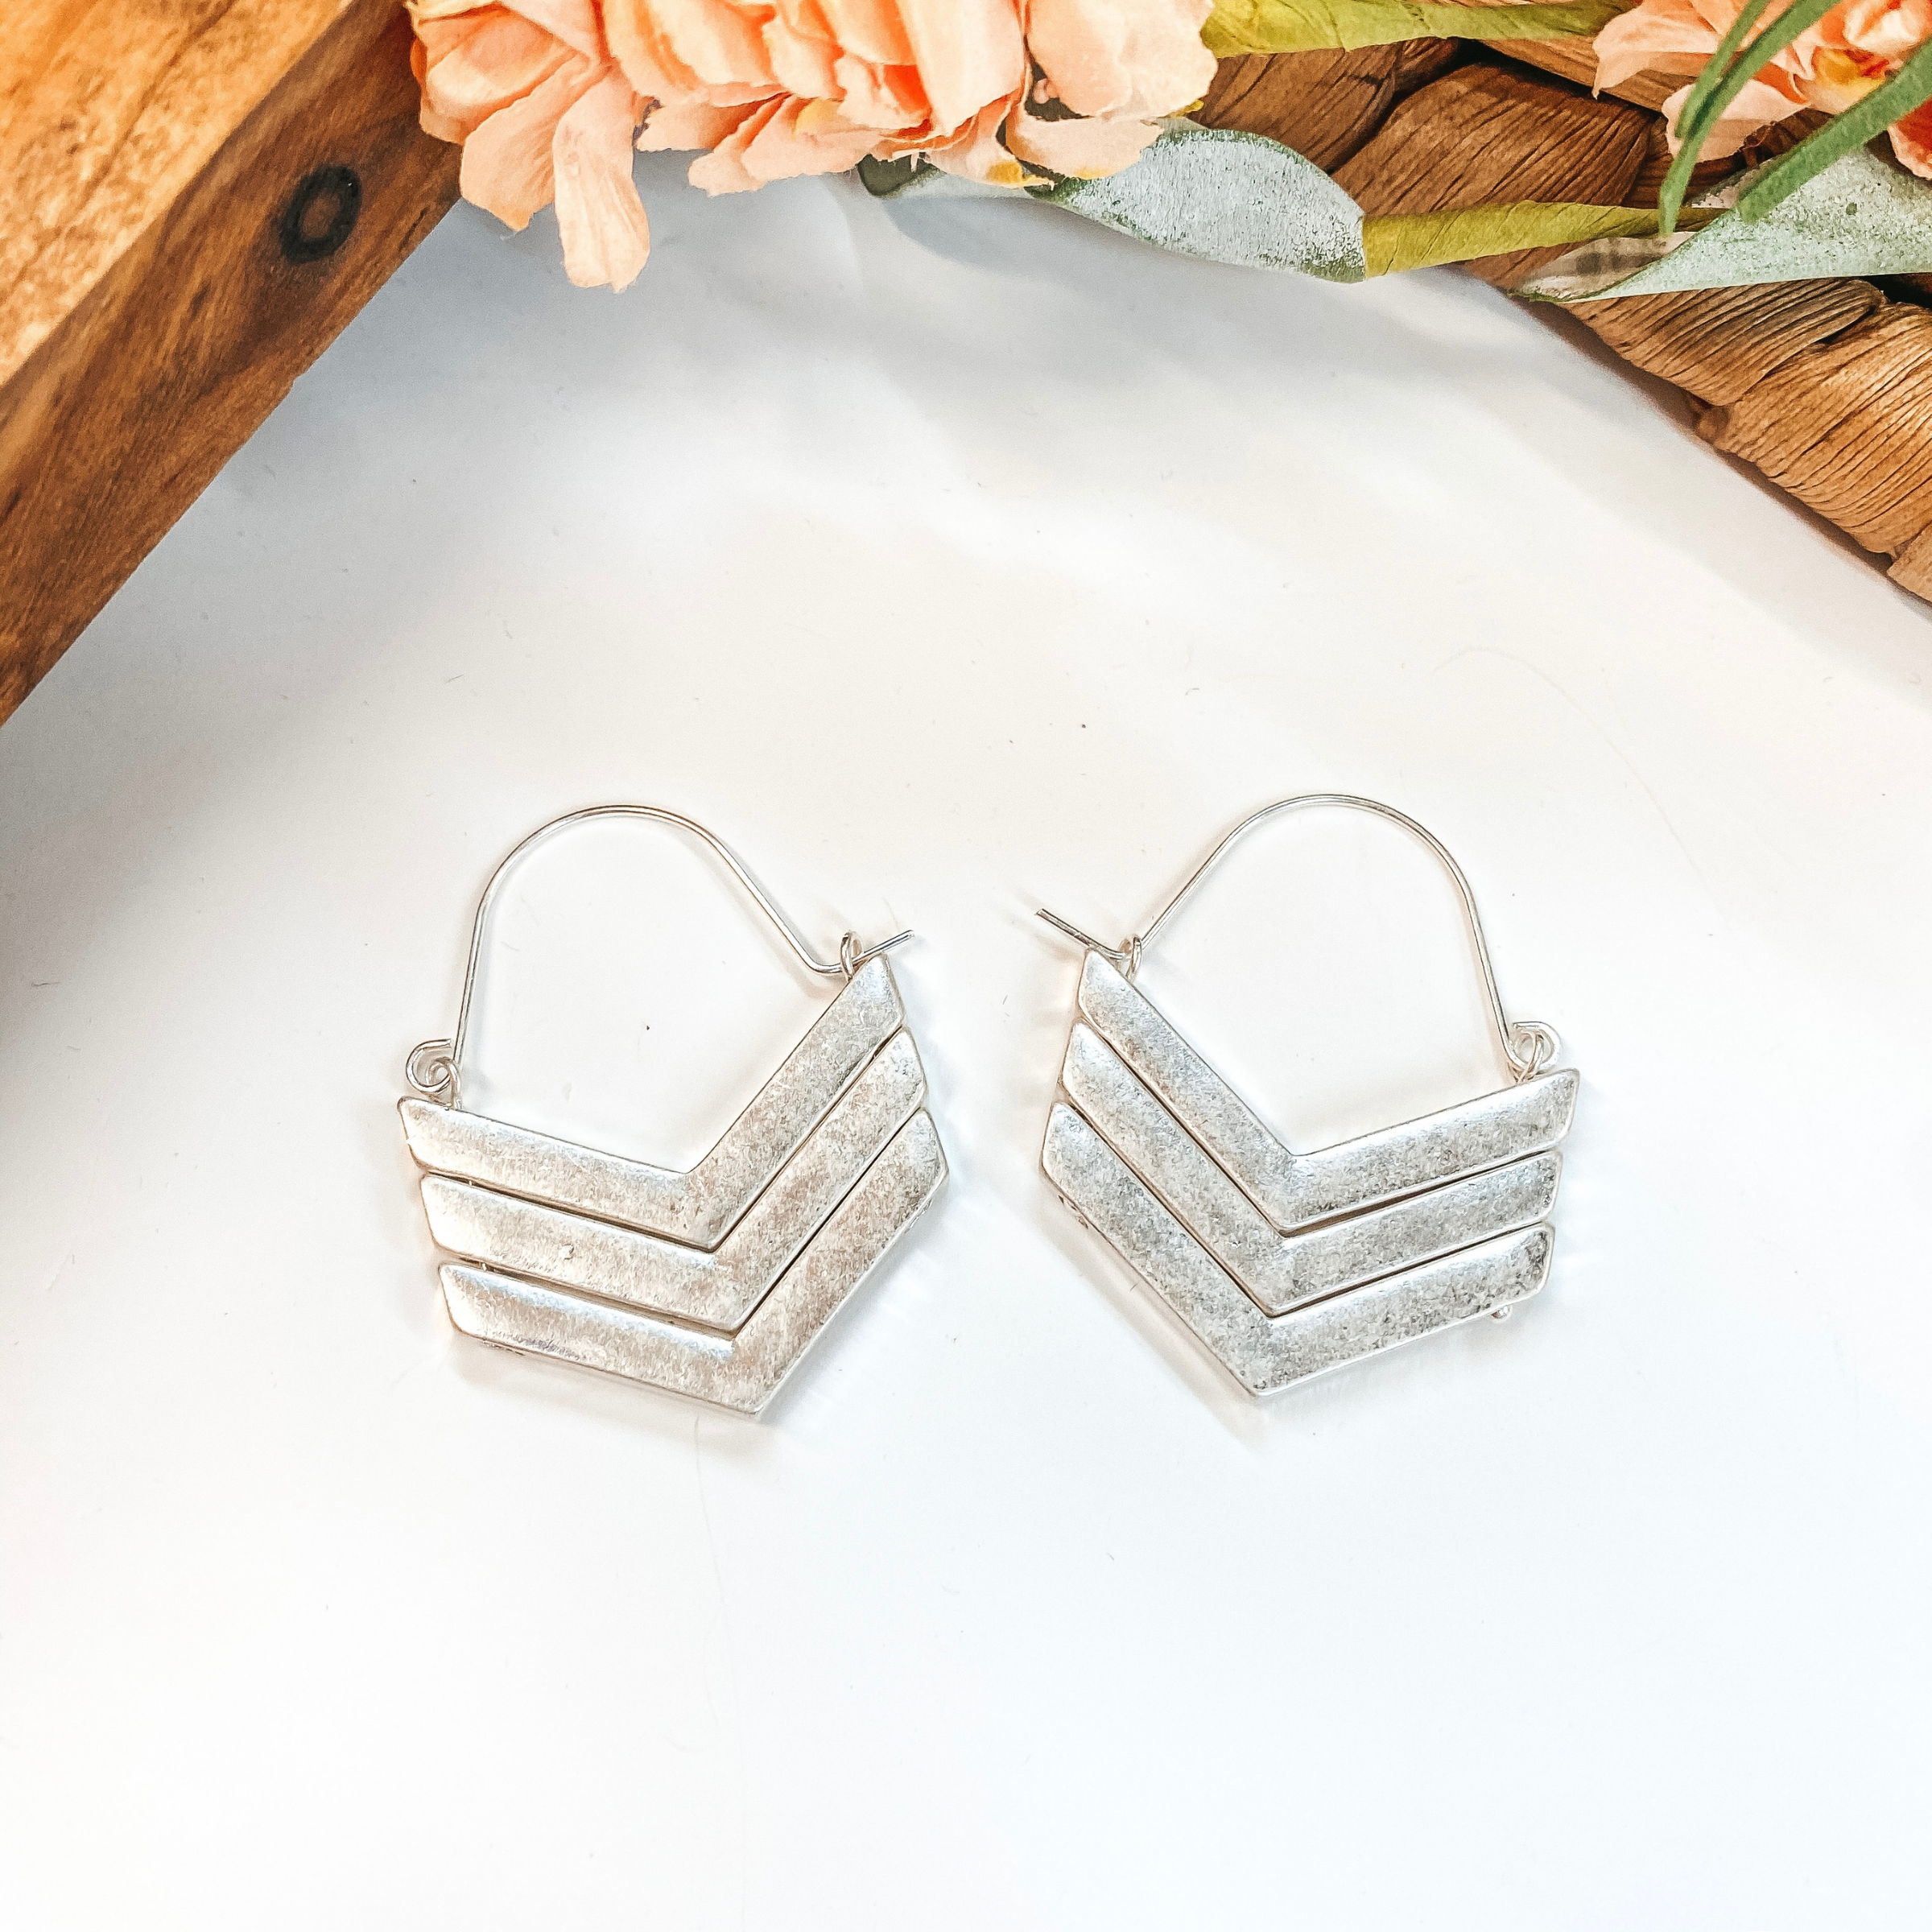 Triple Downward Arrow Dangle Earrings in Silver - Giddy Up Glamour Boutique